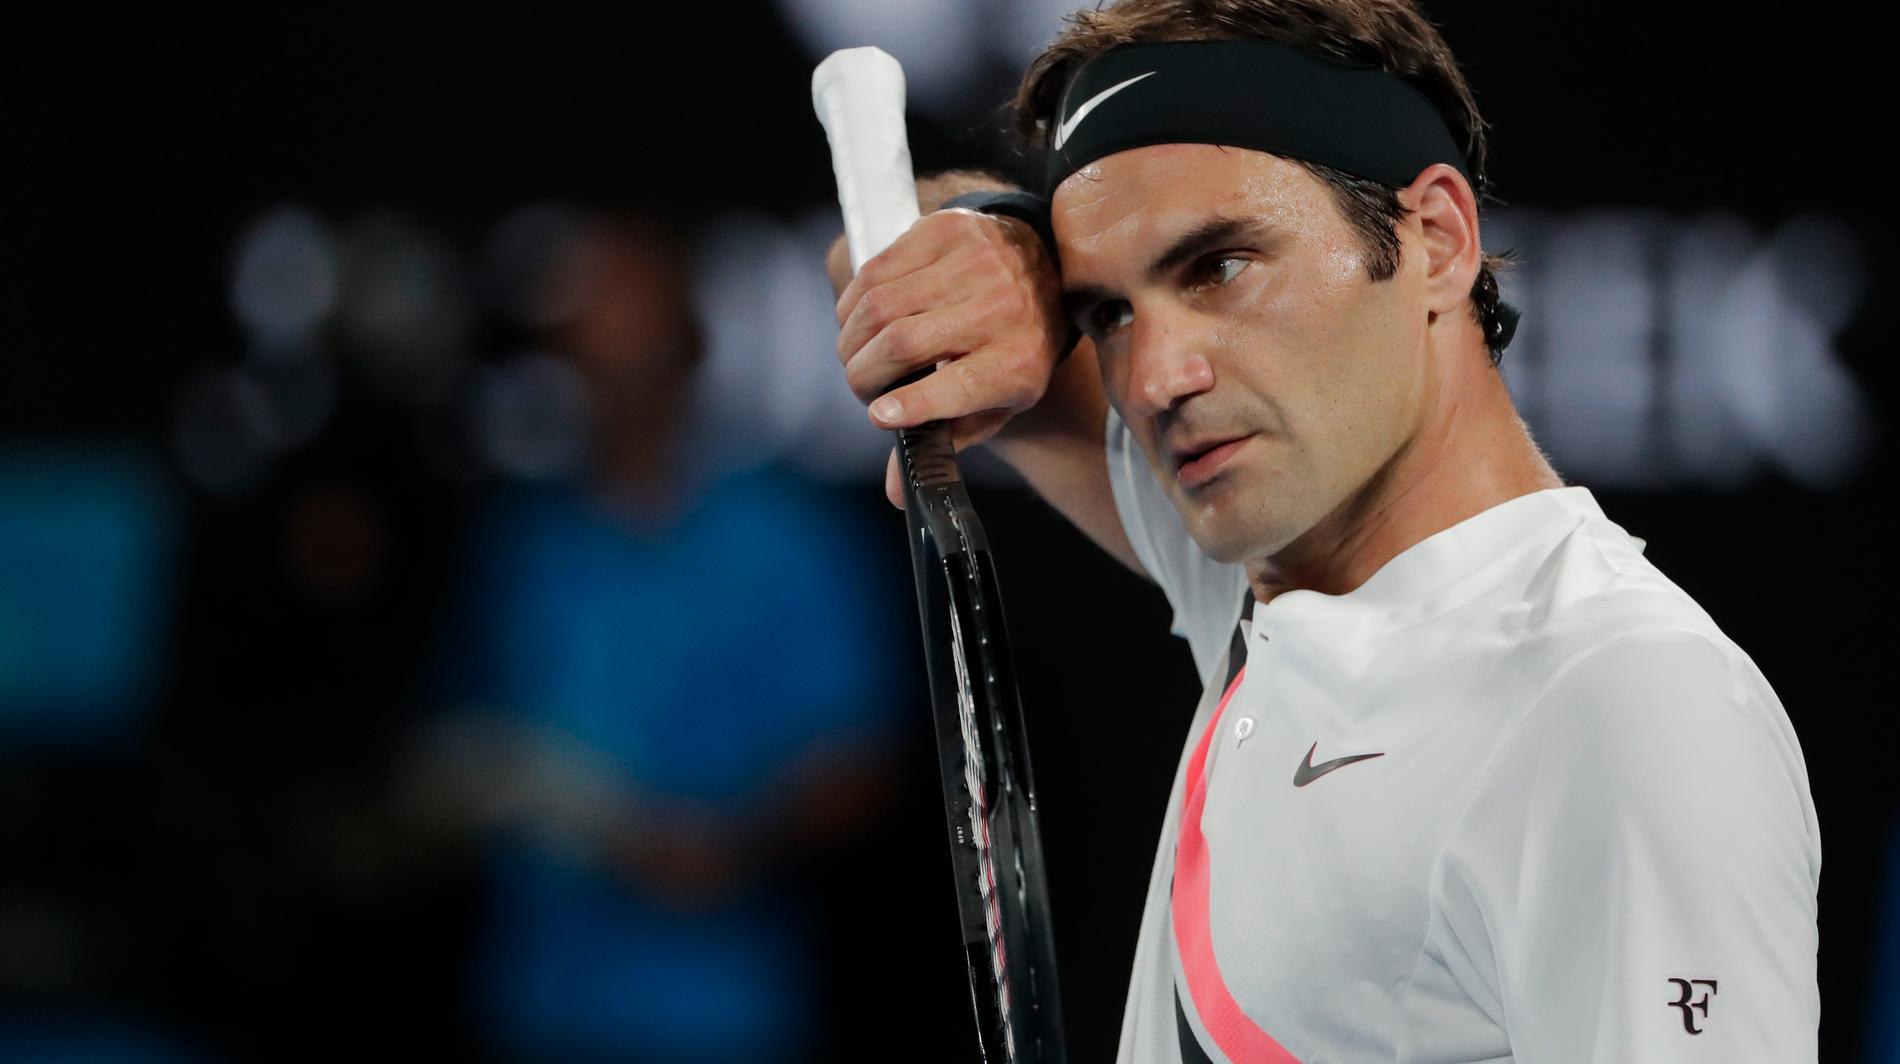 Regerande mästaren, schweizaren Roger Federer vann i tre raka set mot hårdslående tysken Jan-Lennard Struff, 6–4, 6–4, 7–6.